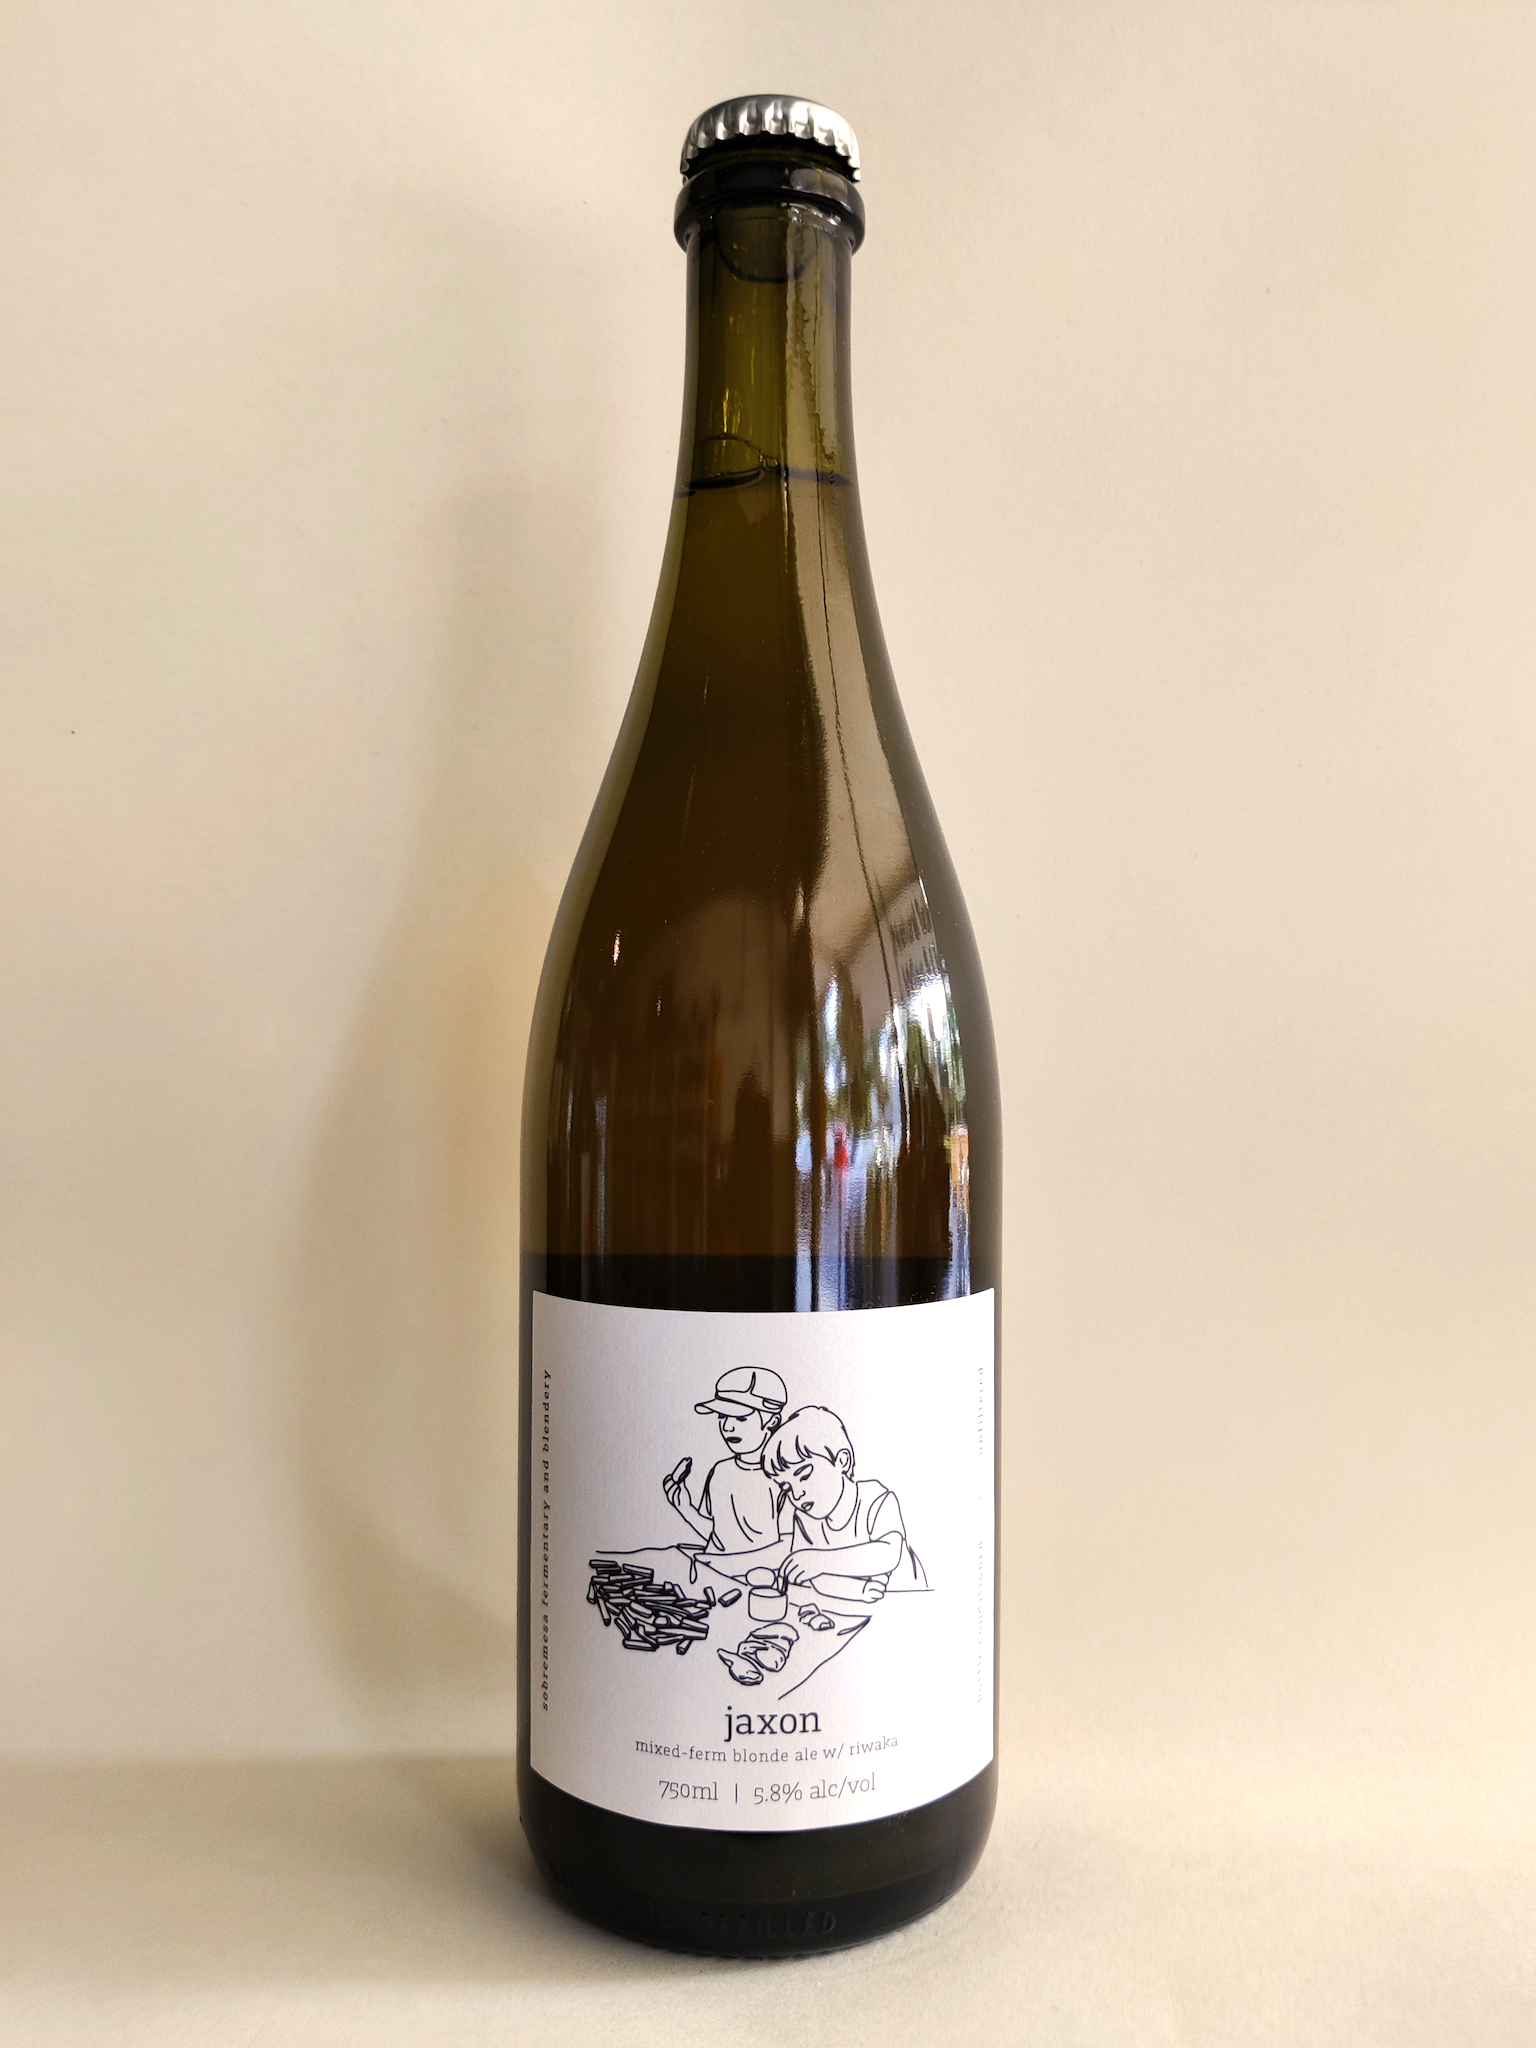 A 750ml bottle of Sobremesa "Jaxon" Wild Blonde Ale.